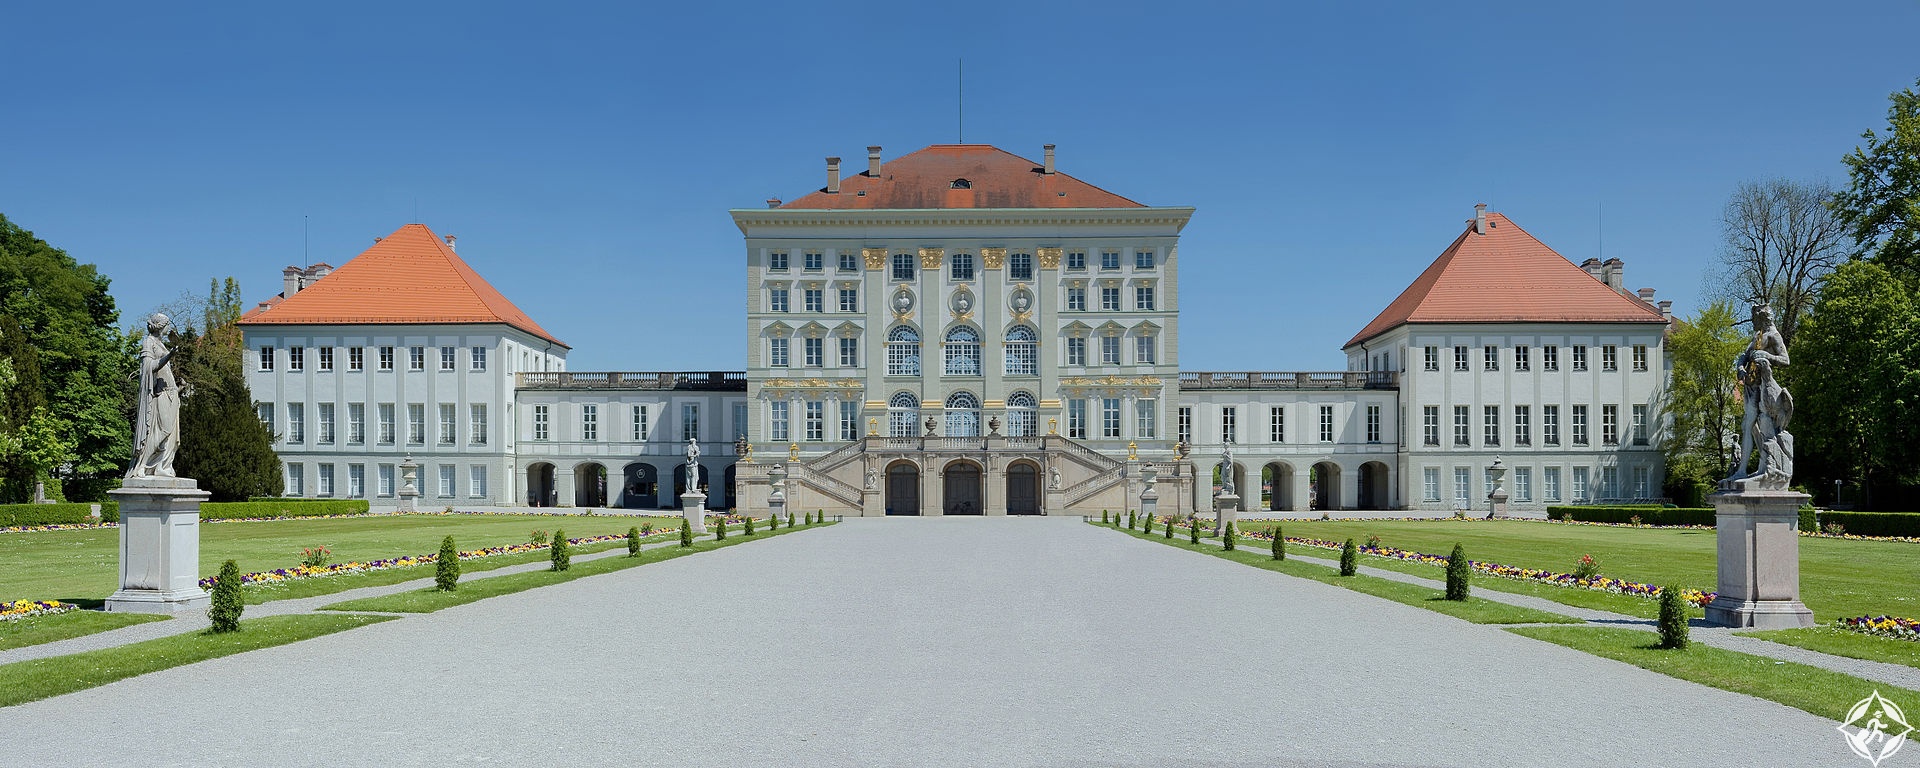 قصر نيمفينبورغ